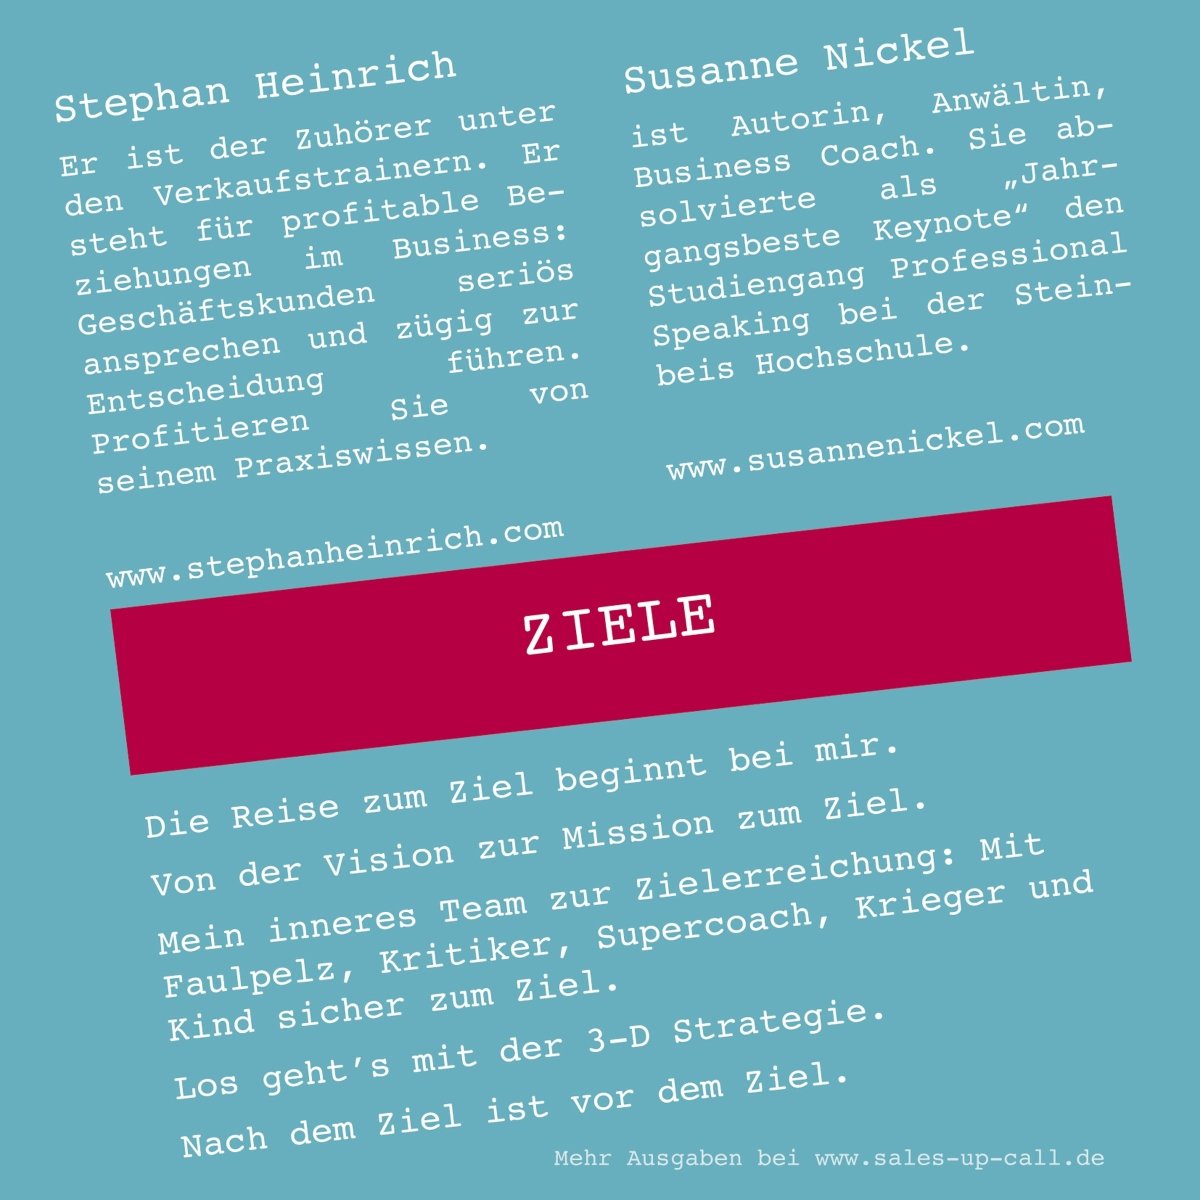 Ziele - Sales-up-Call - Stephan Heinrich